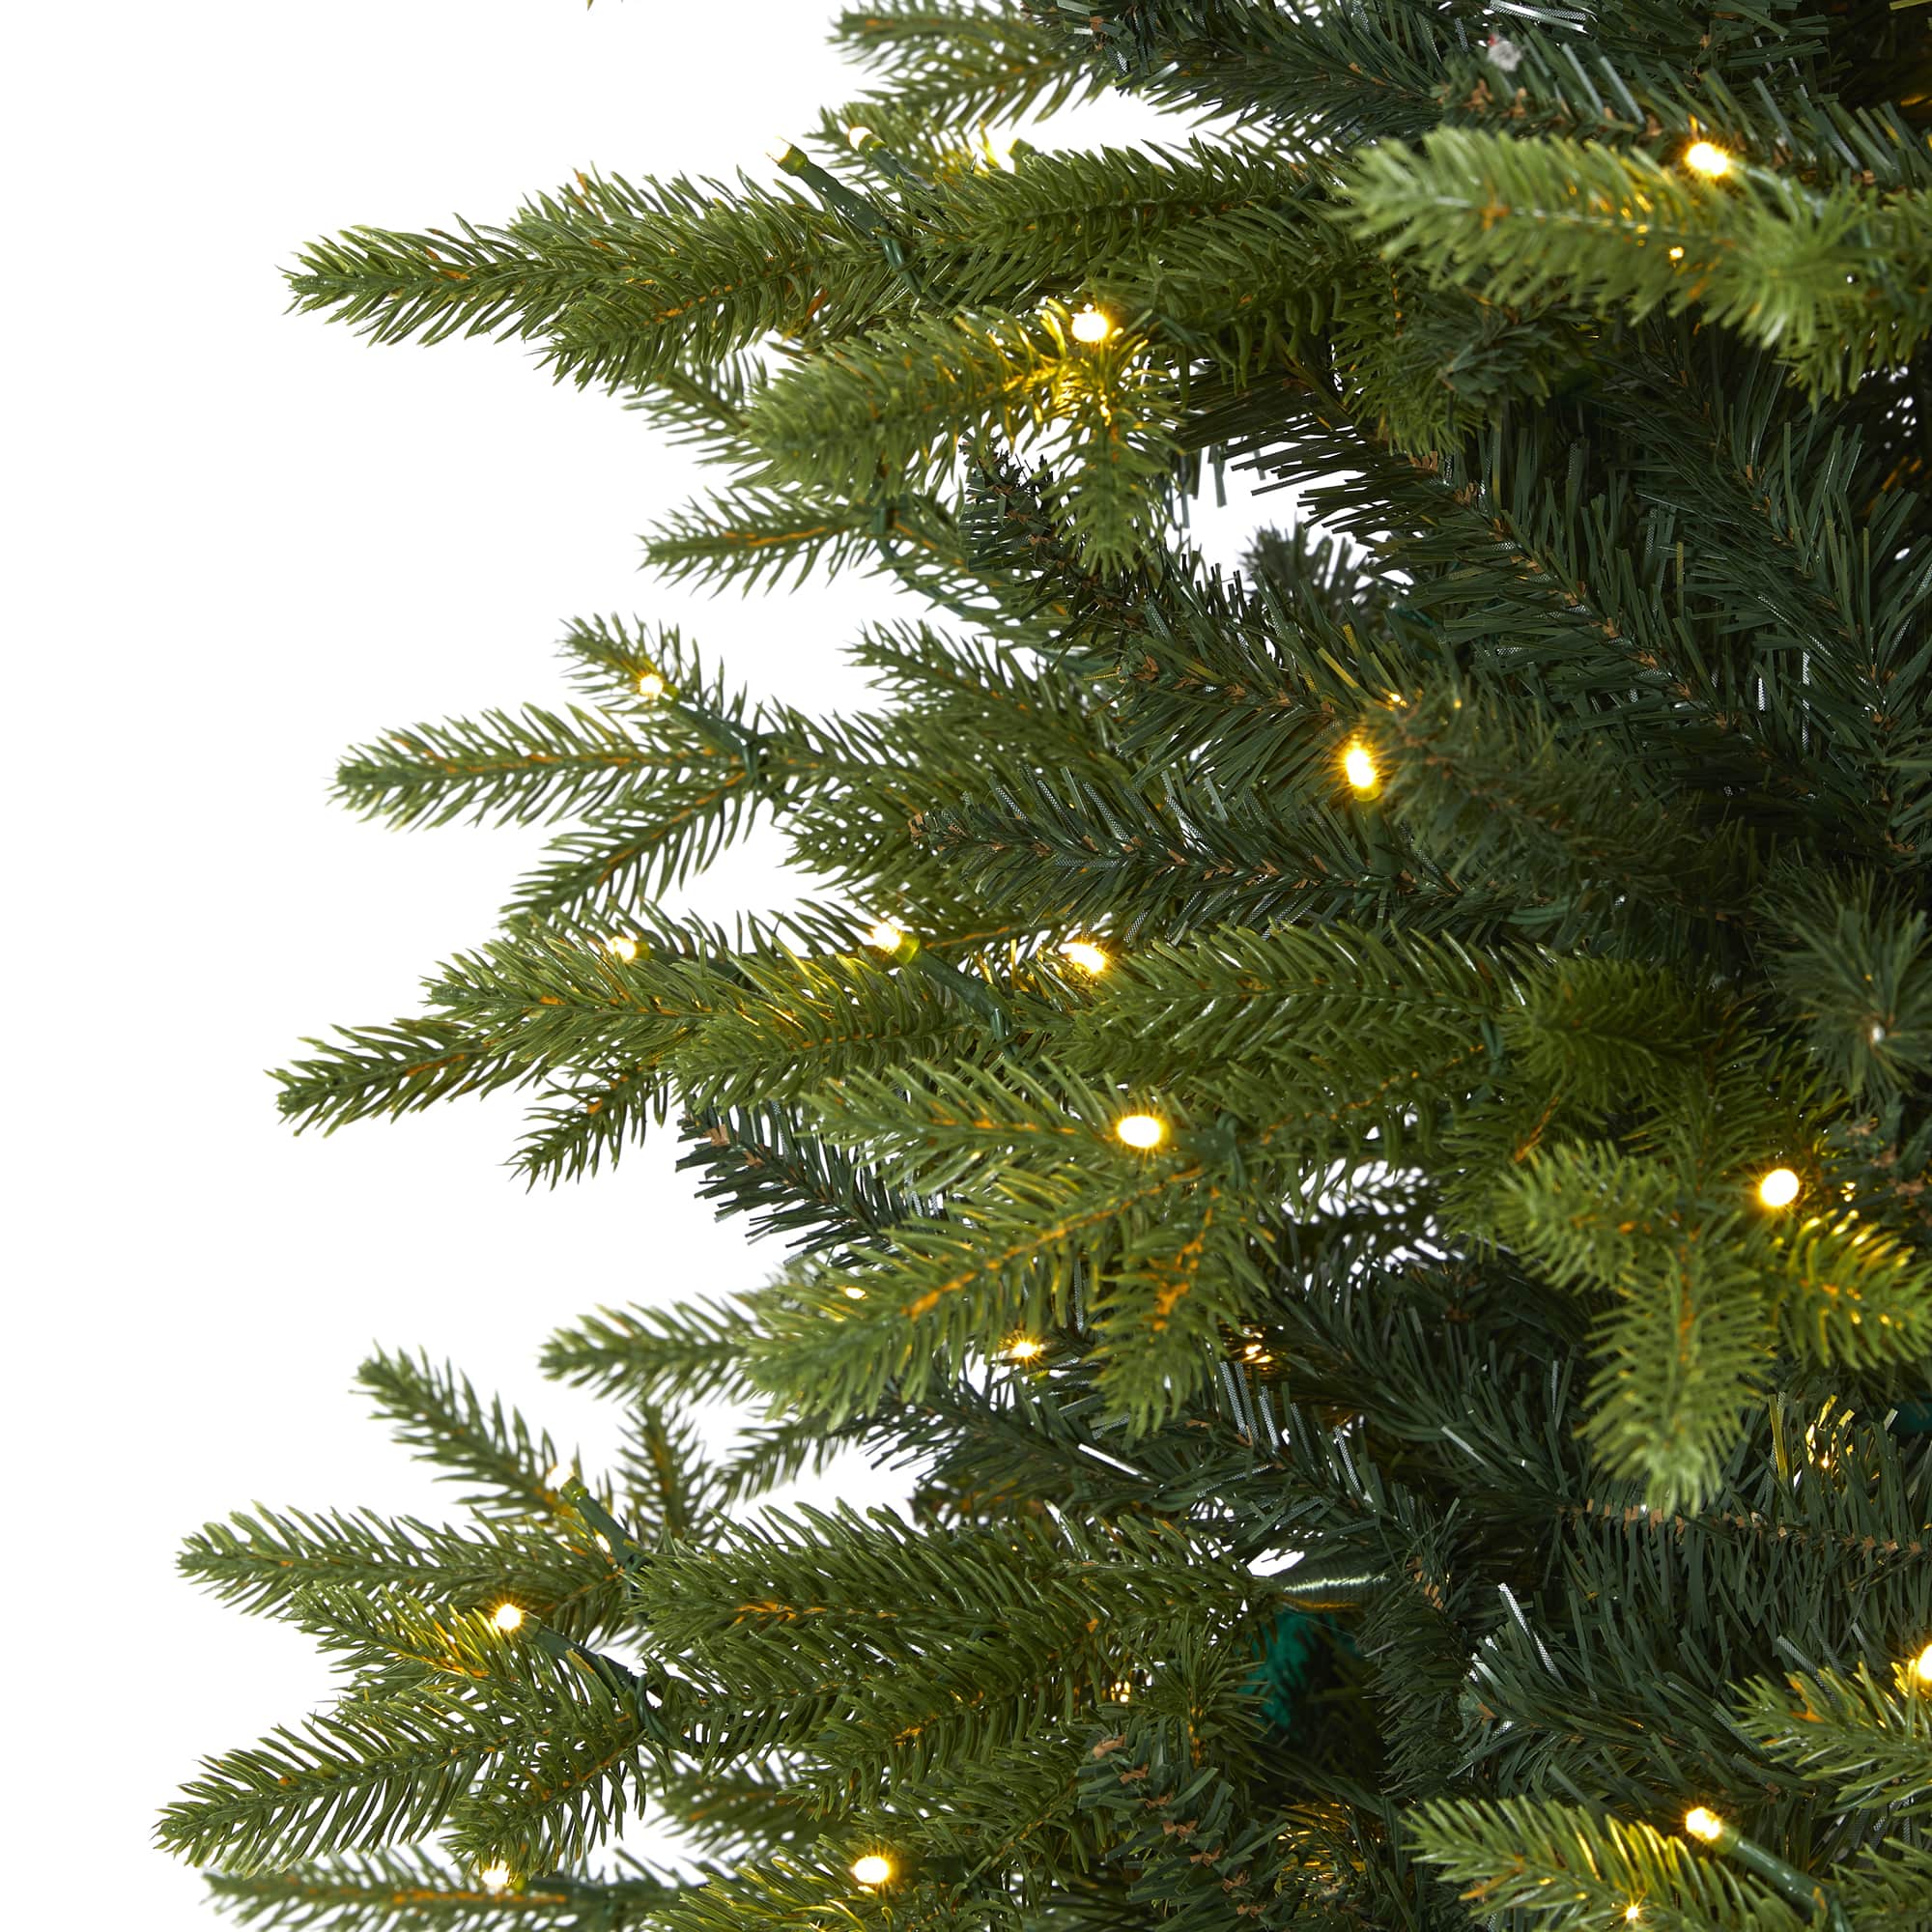 8ft. Pre-Lit Belgium Fir Artificial Christmas Tree, Clear LED Lights